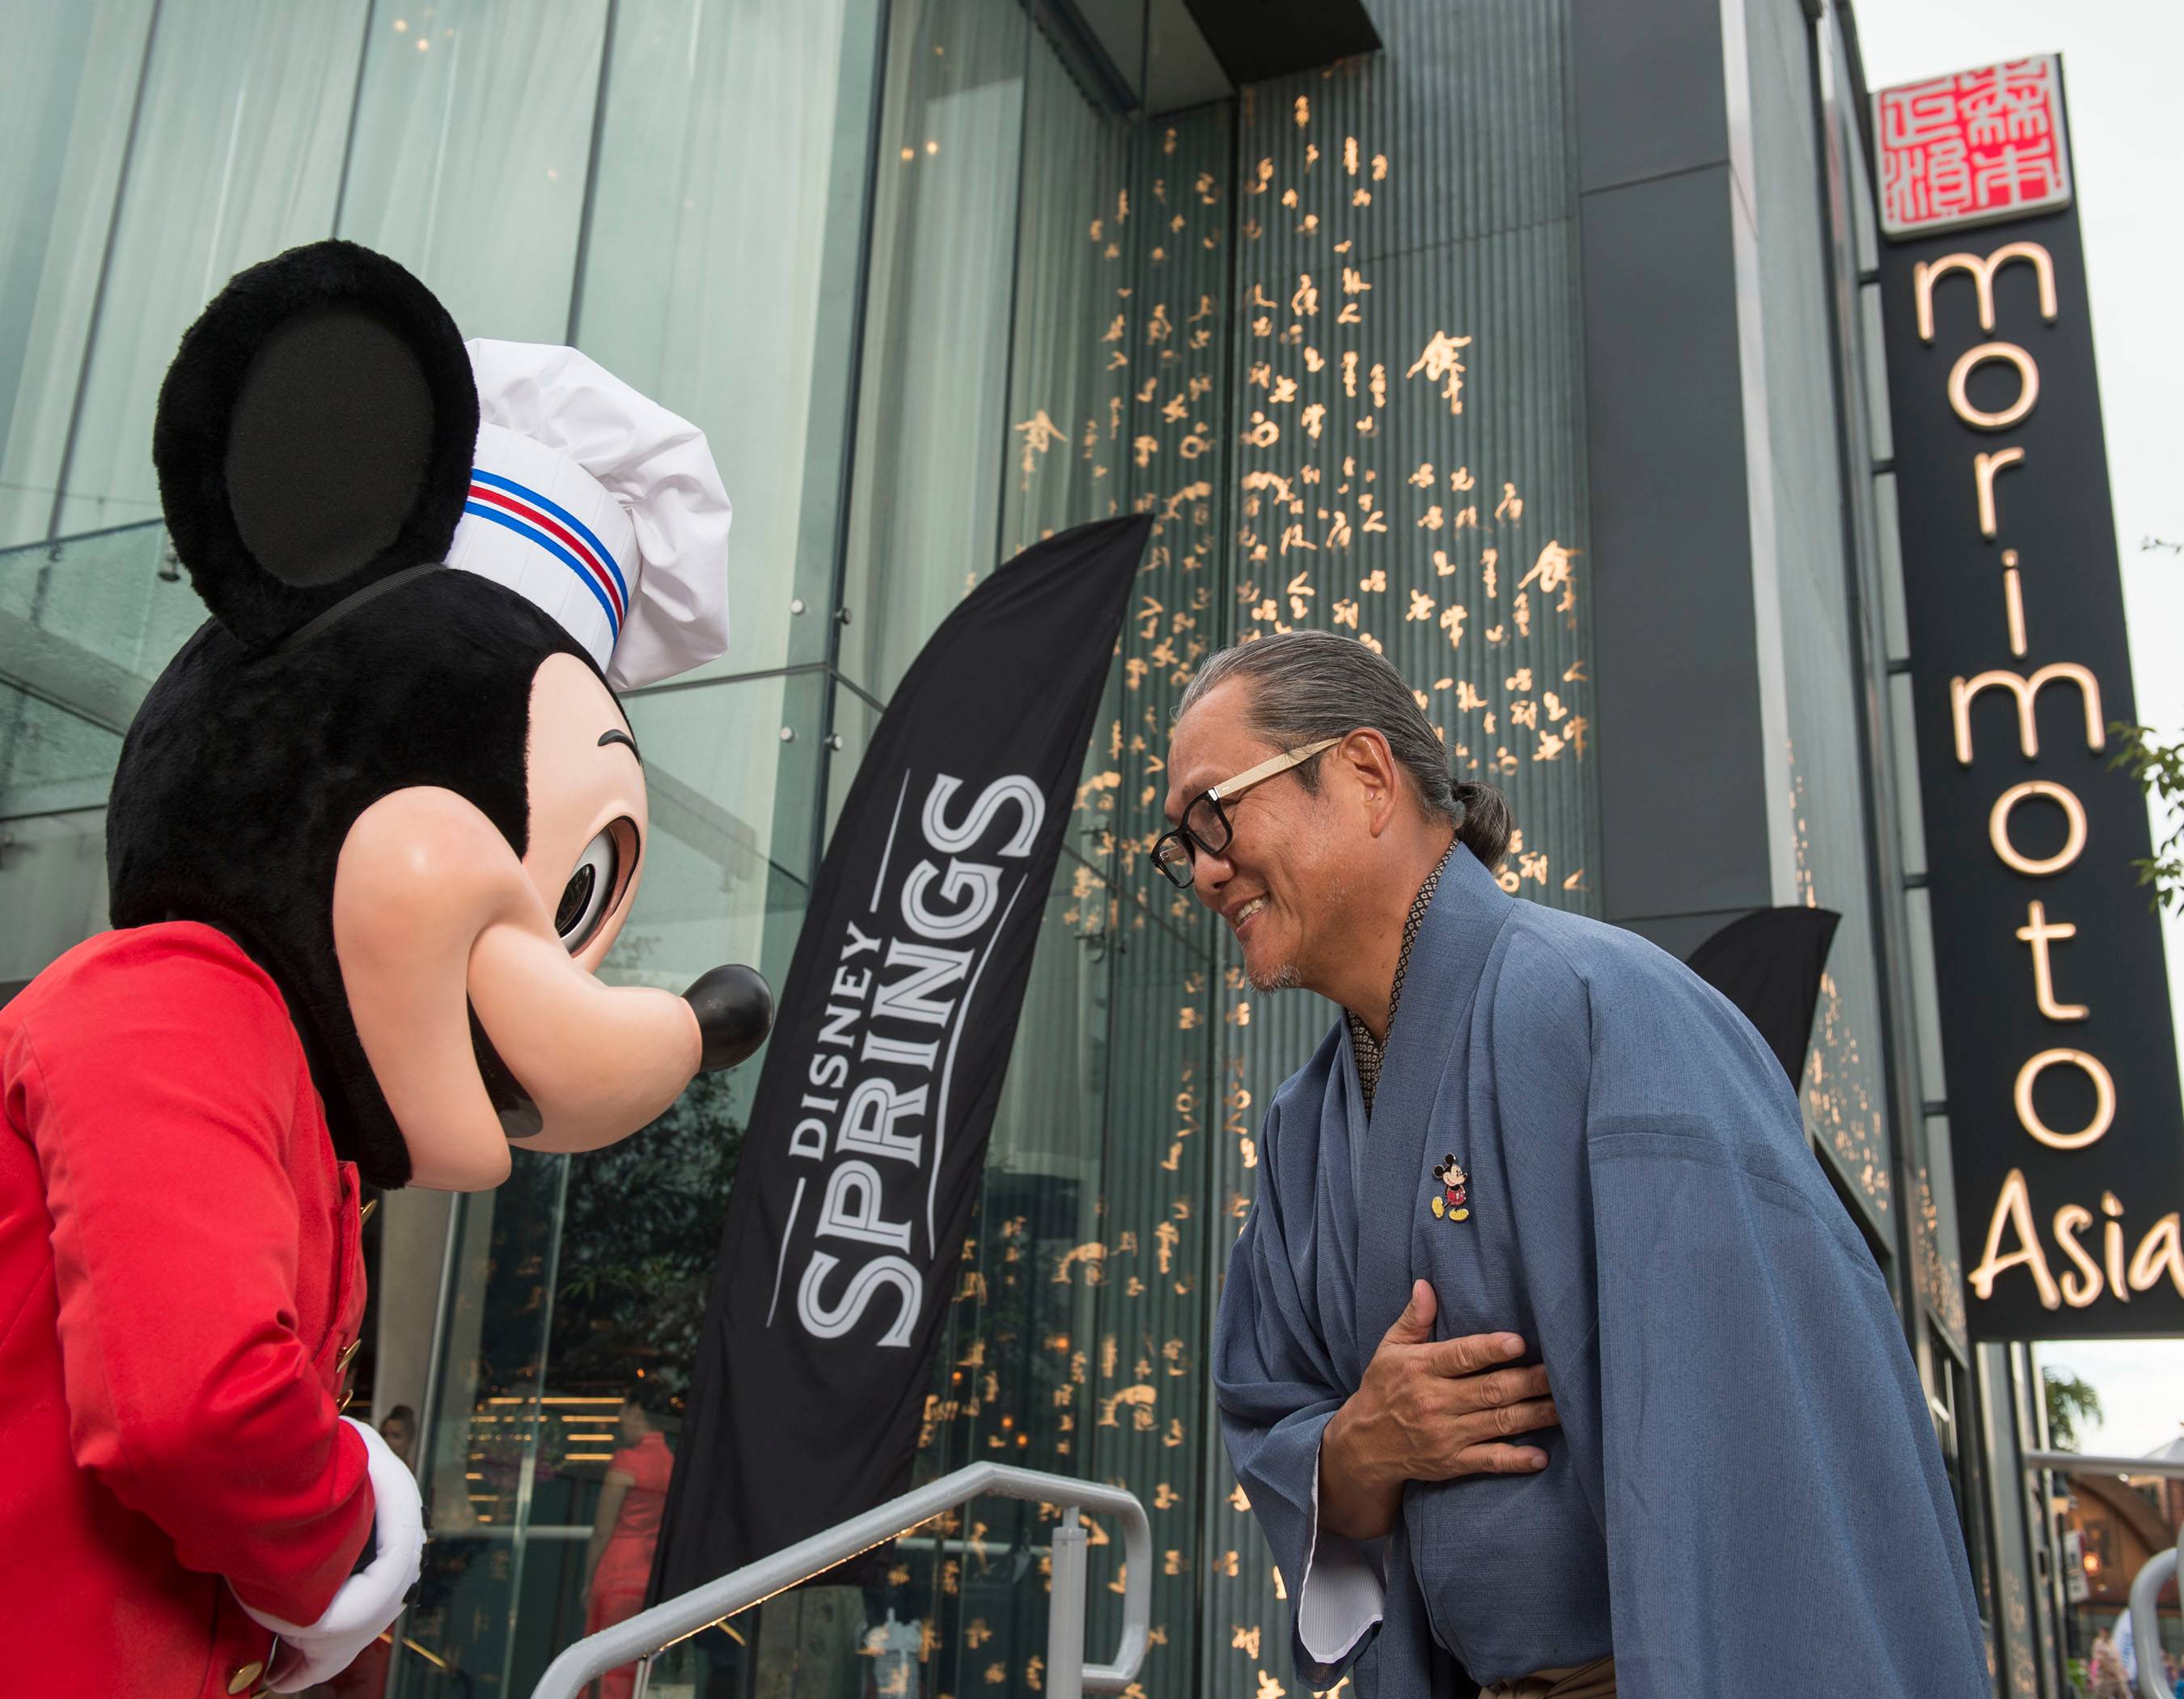 VIDEO - Iron Chef Morimoto joins Disney leaders to officially open Morimoto Asia at Disney Springs